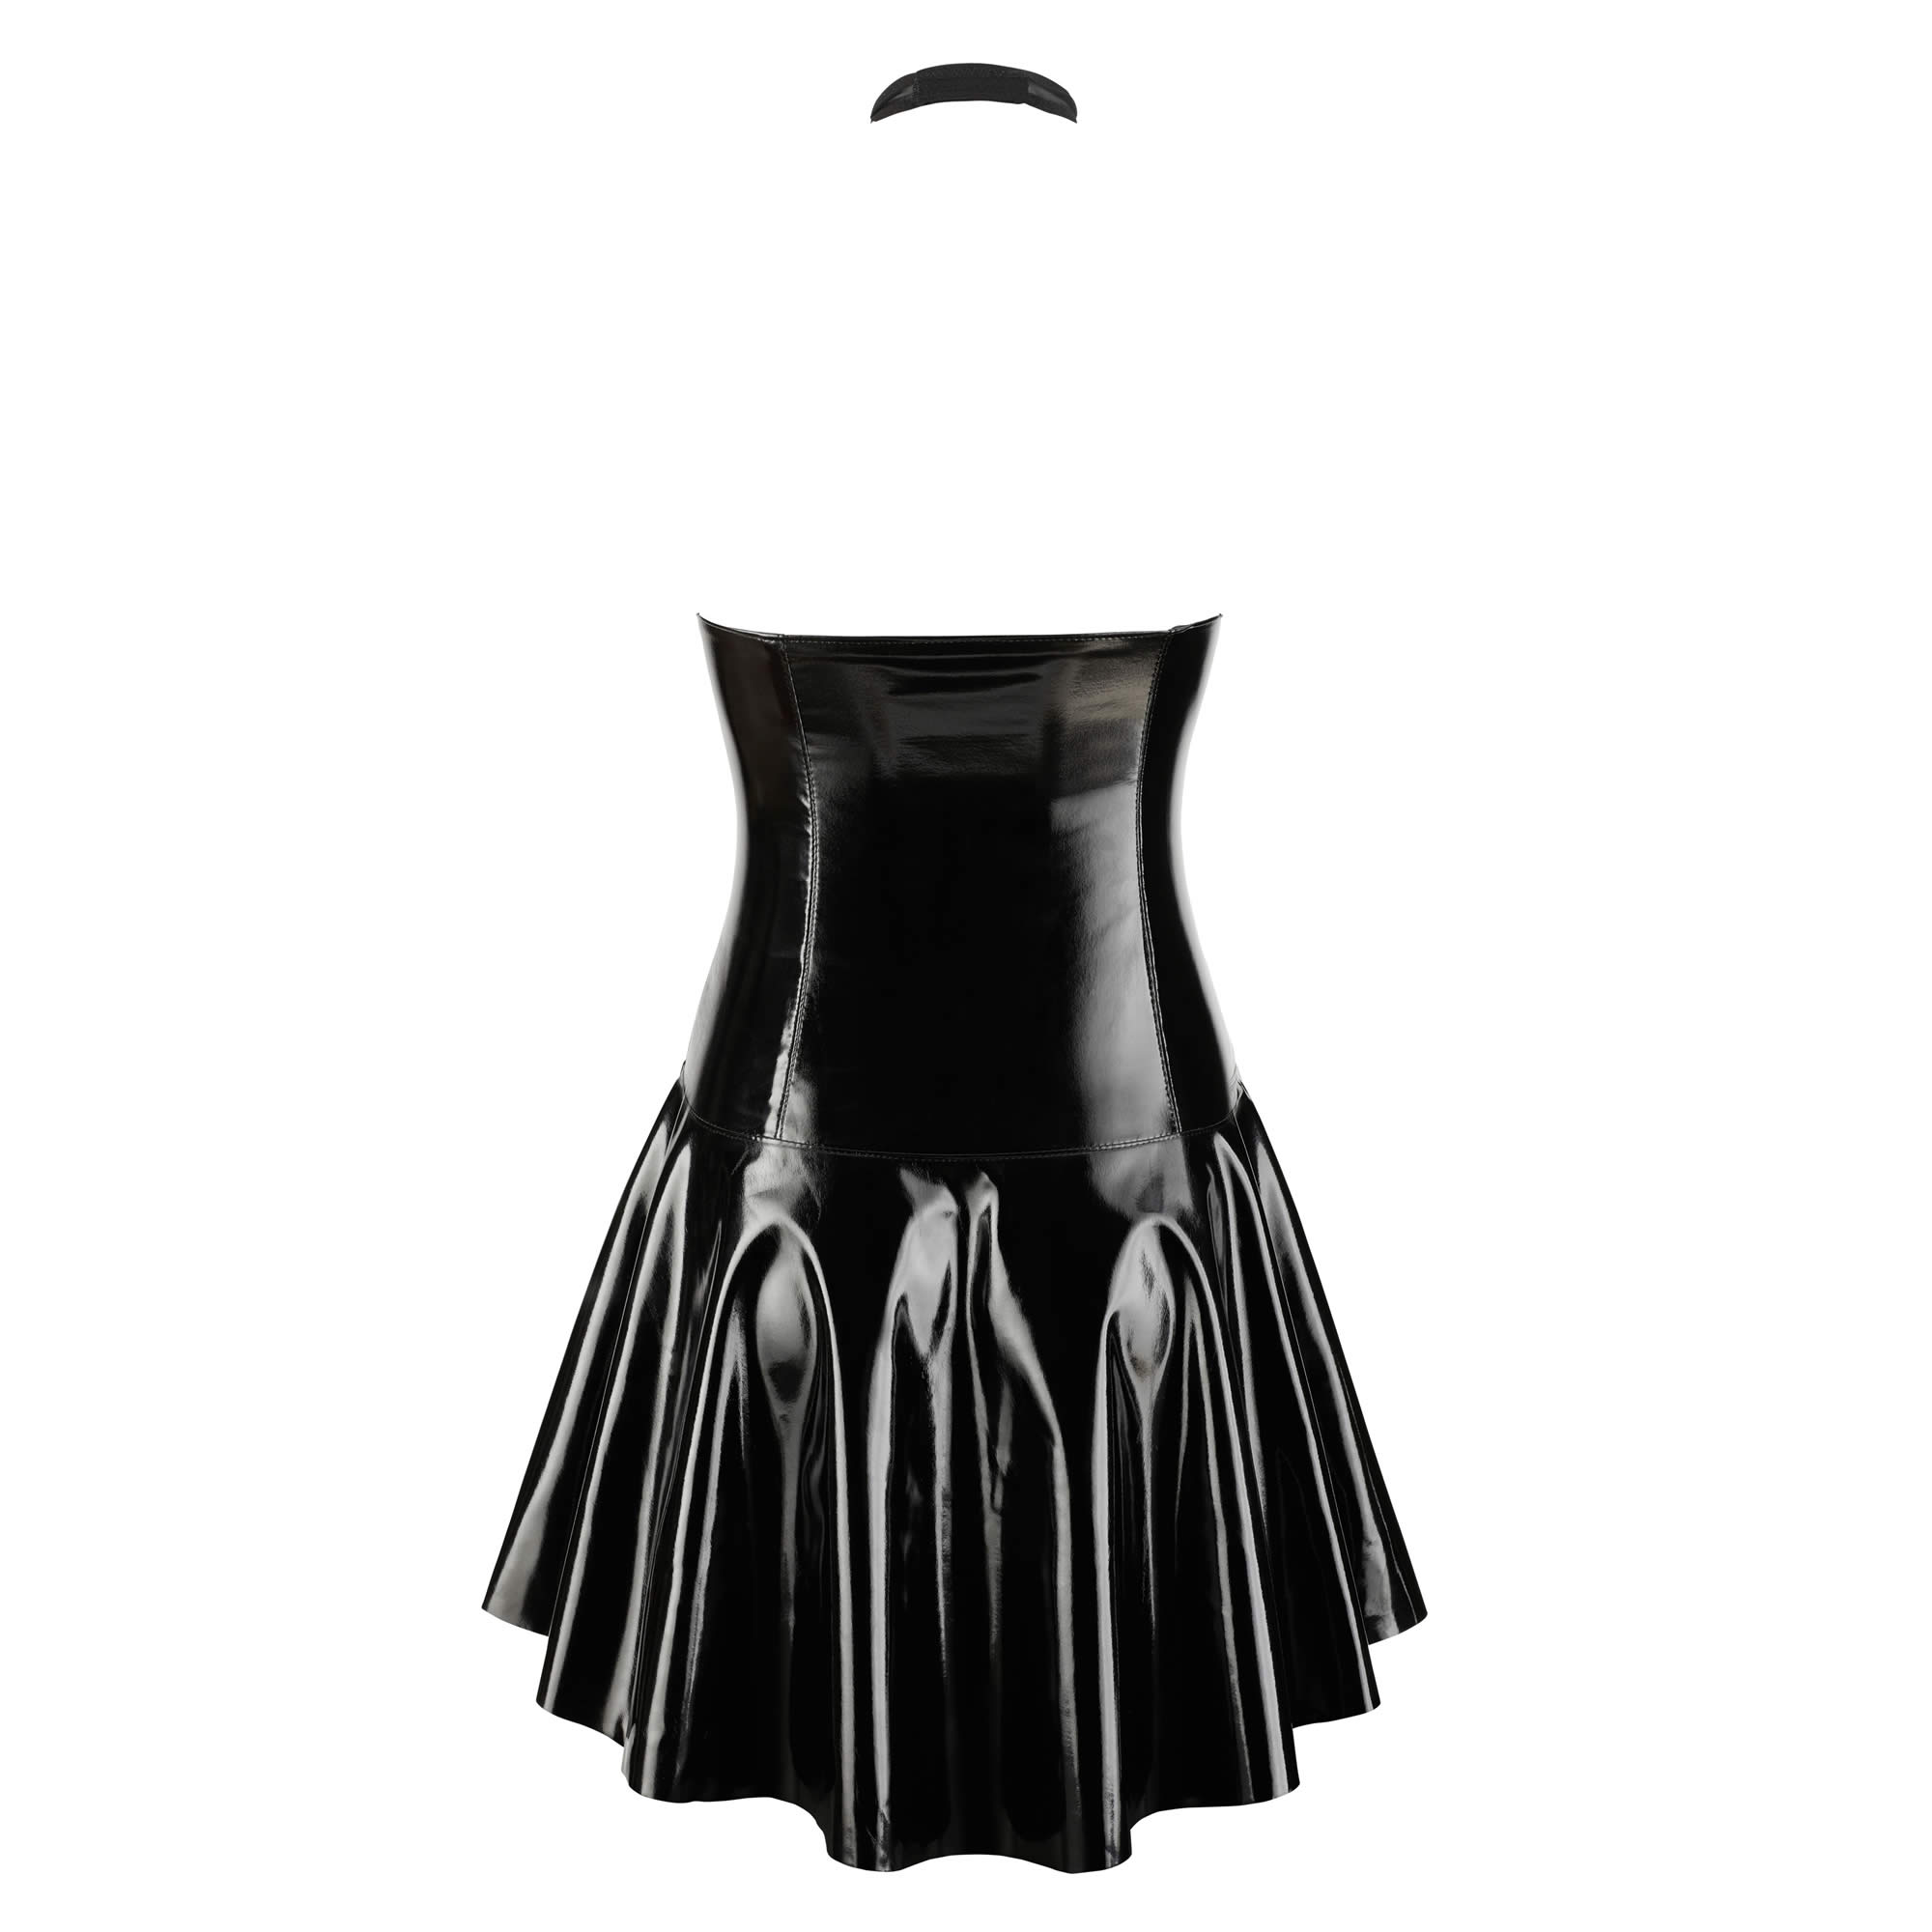 Vinyl Dress with Transparent Top